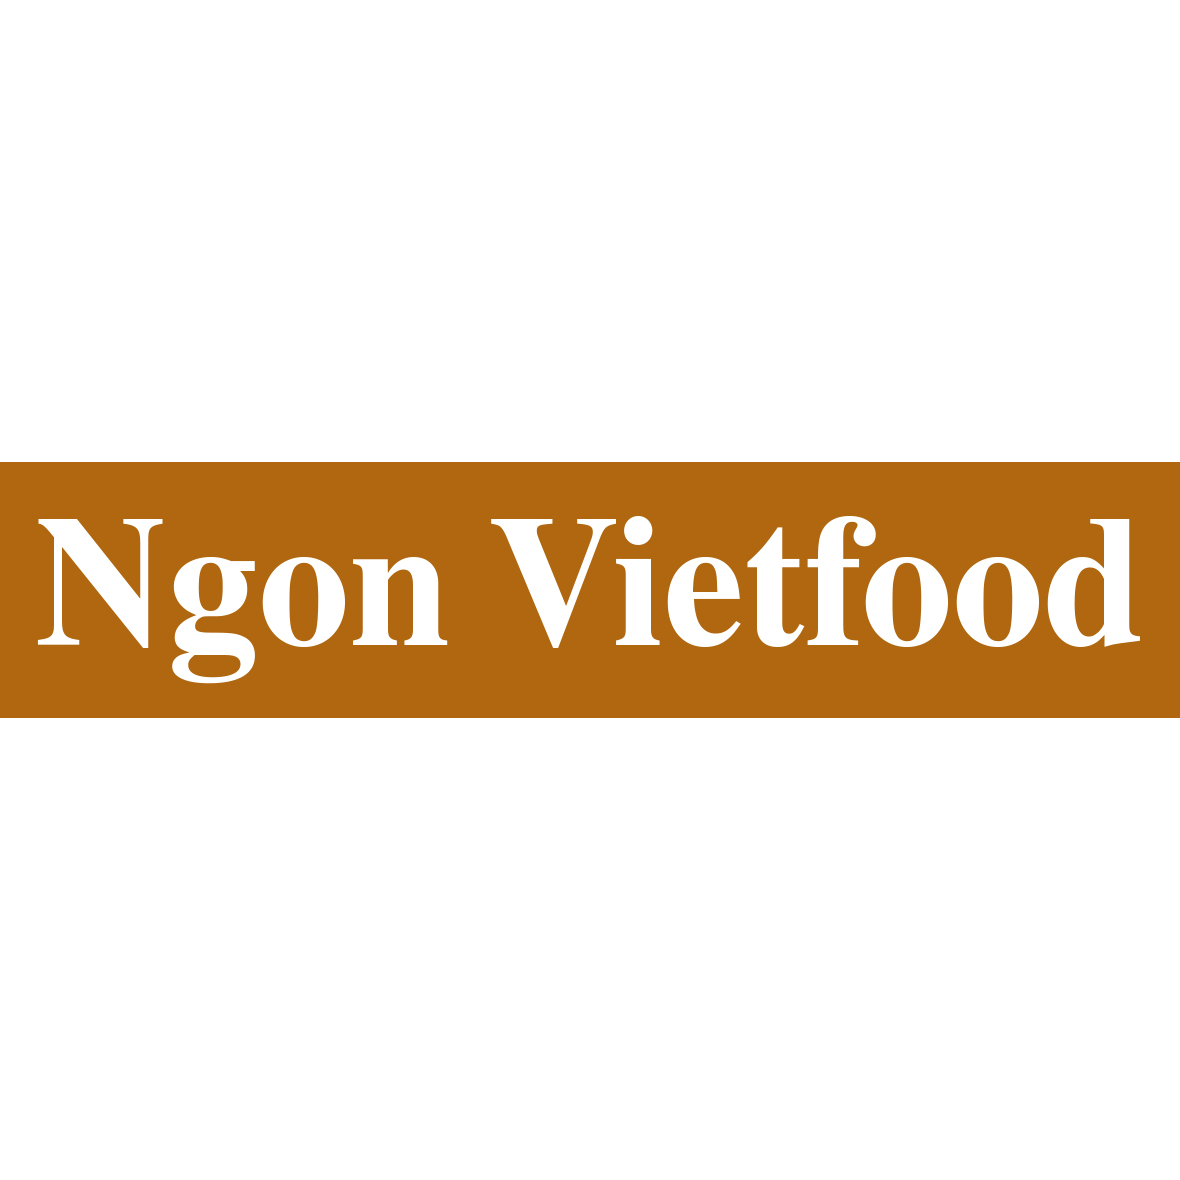 Ngon Vietfood  